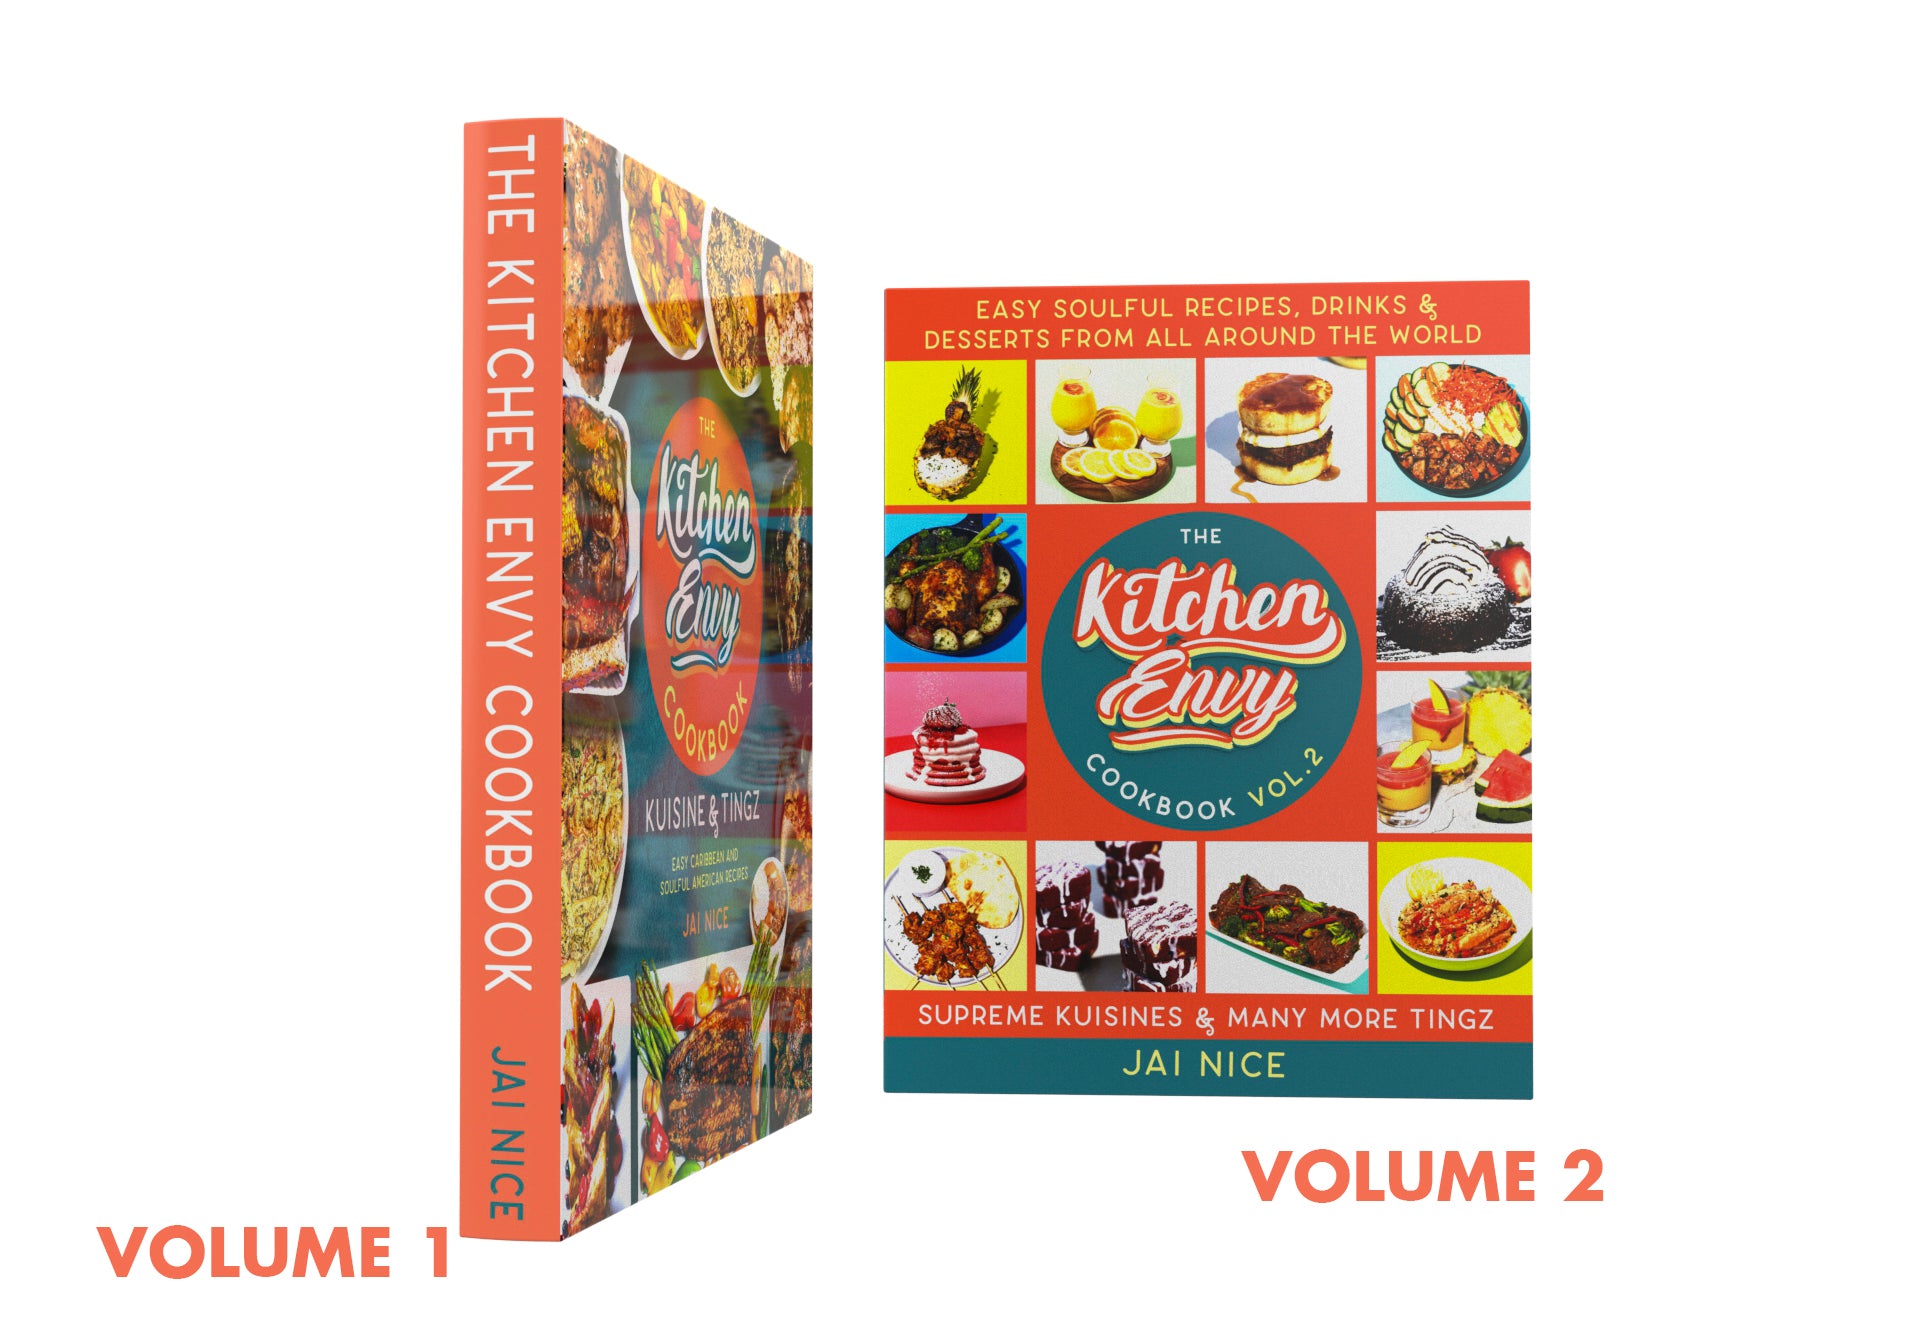 The Nice Spice Collection & Cookbooks Bundle Deal - Kitchen Envy